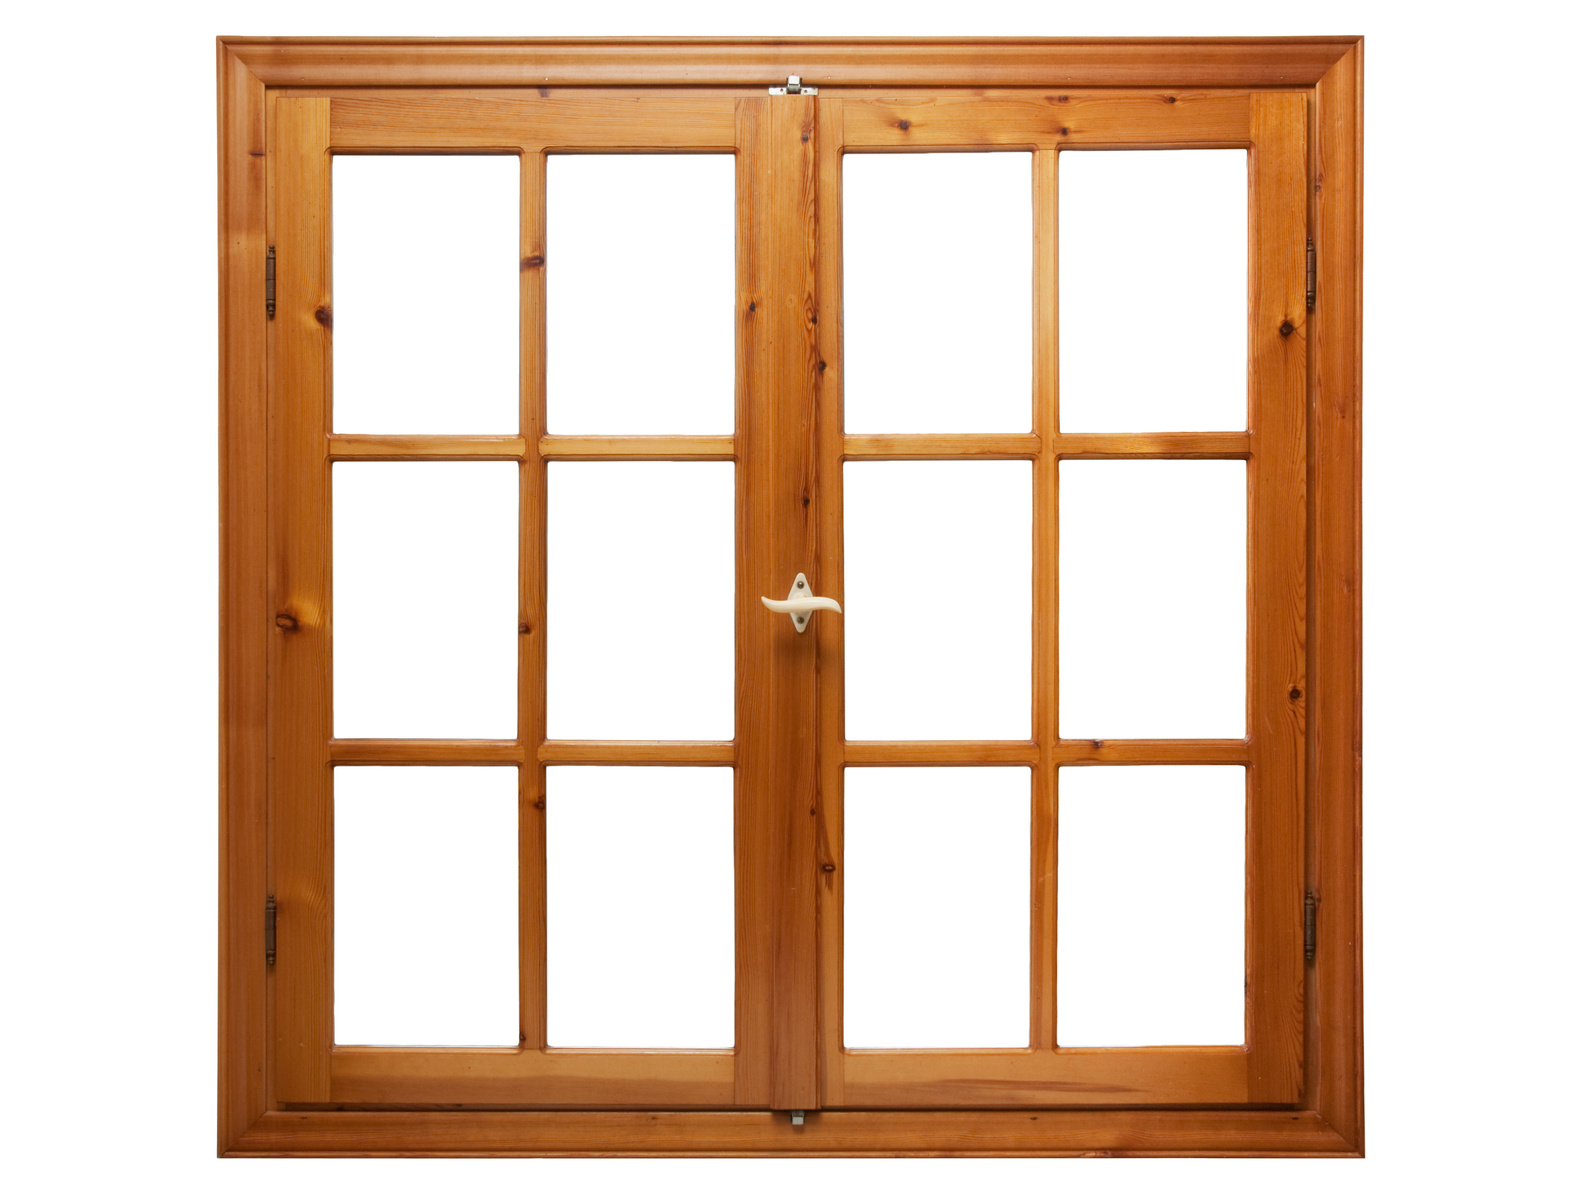 4 Reasons Why You Should Choose Wood Windows